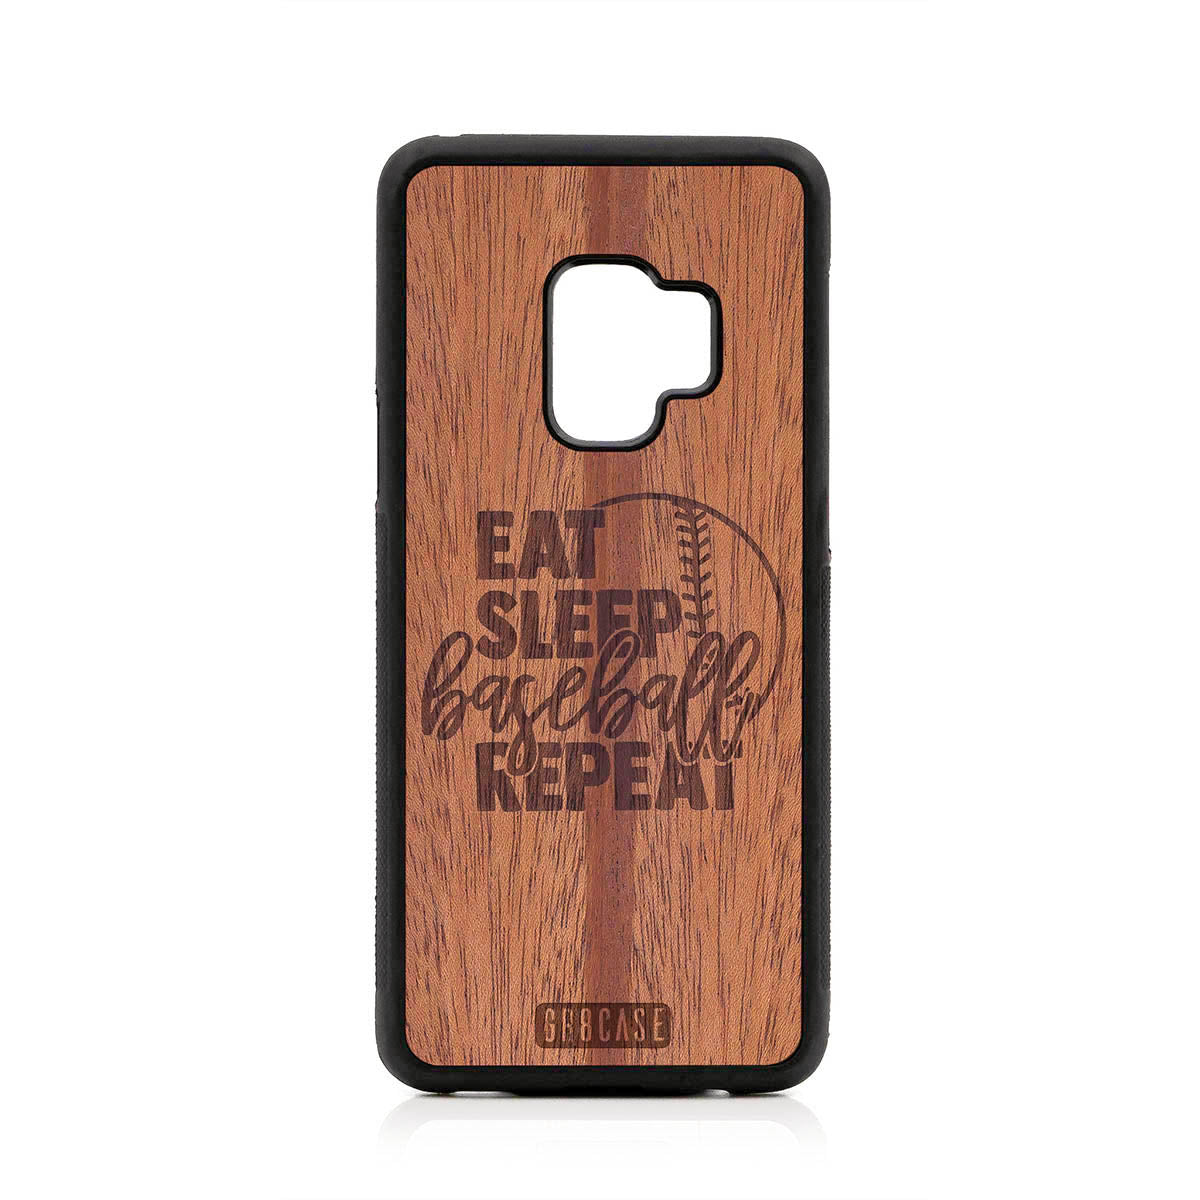 Eat Sleep Baseball Repeat Design Wood Case For Samsung Galaxy S9